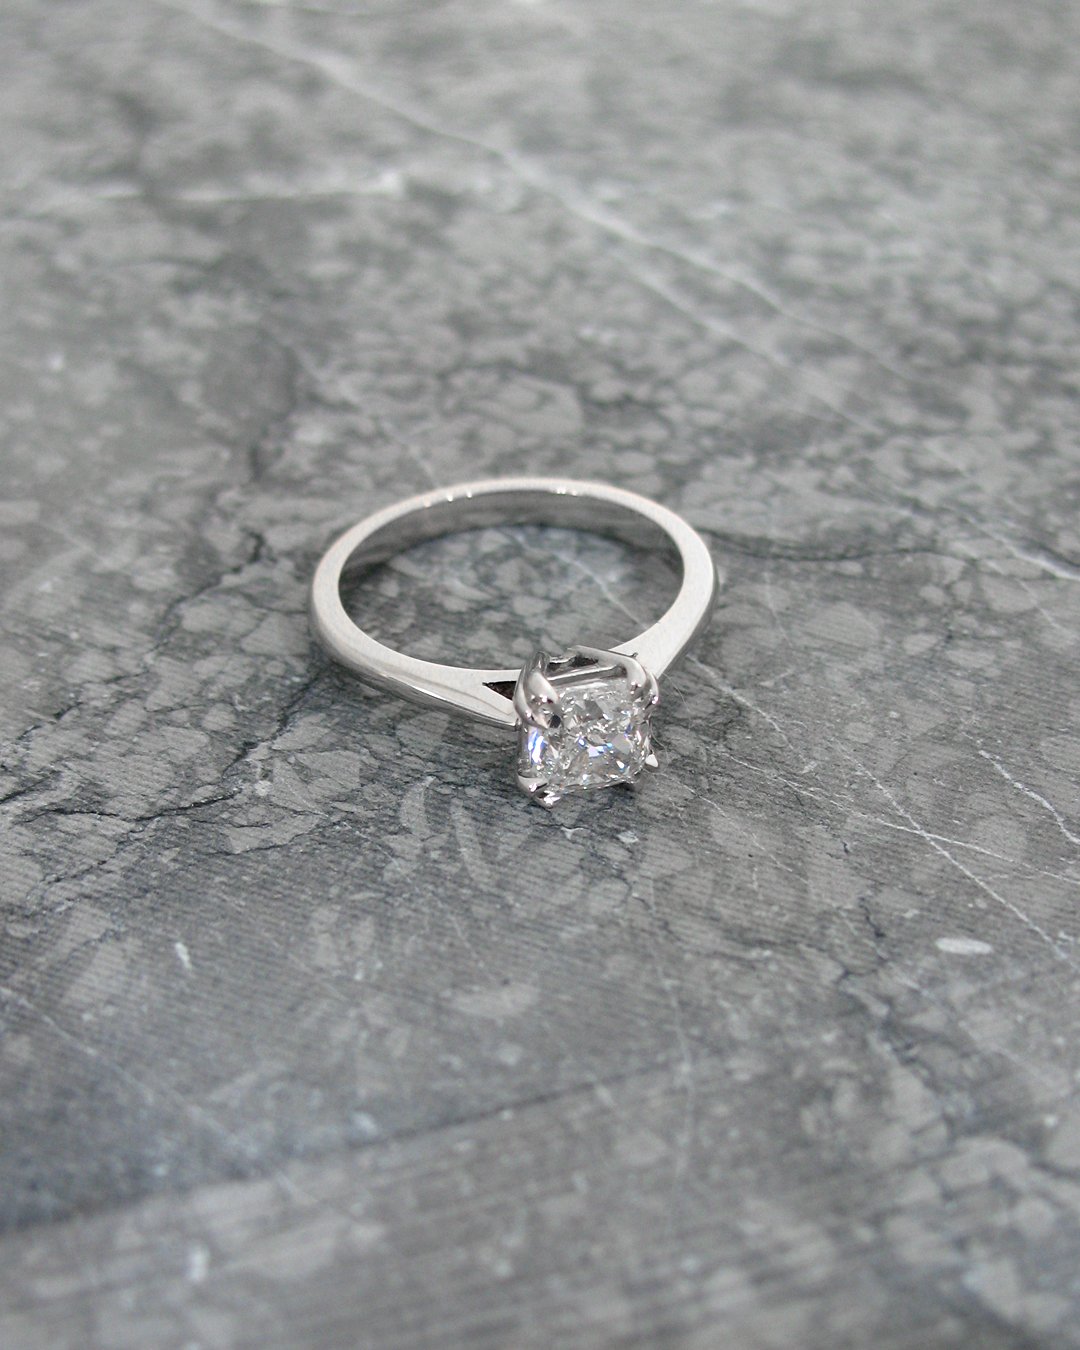 A classy cushion cut diamond engagement ring